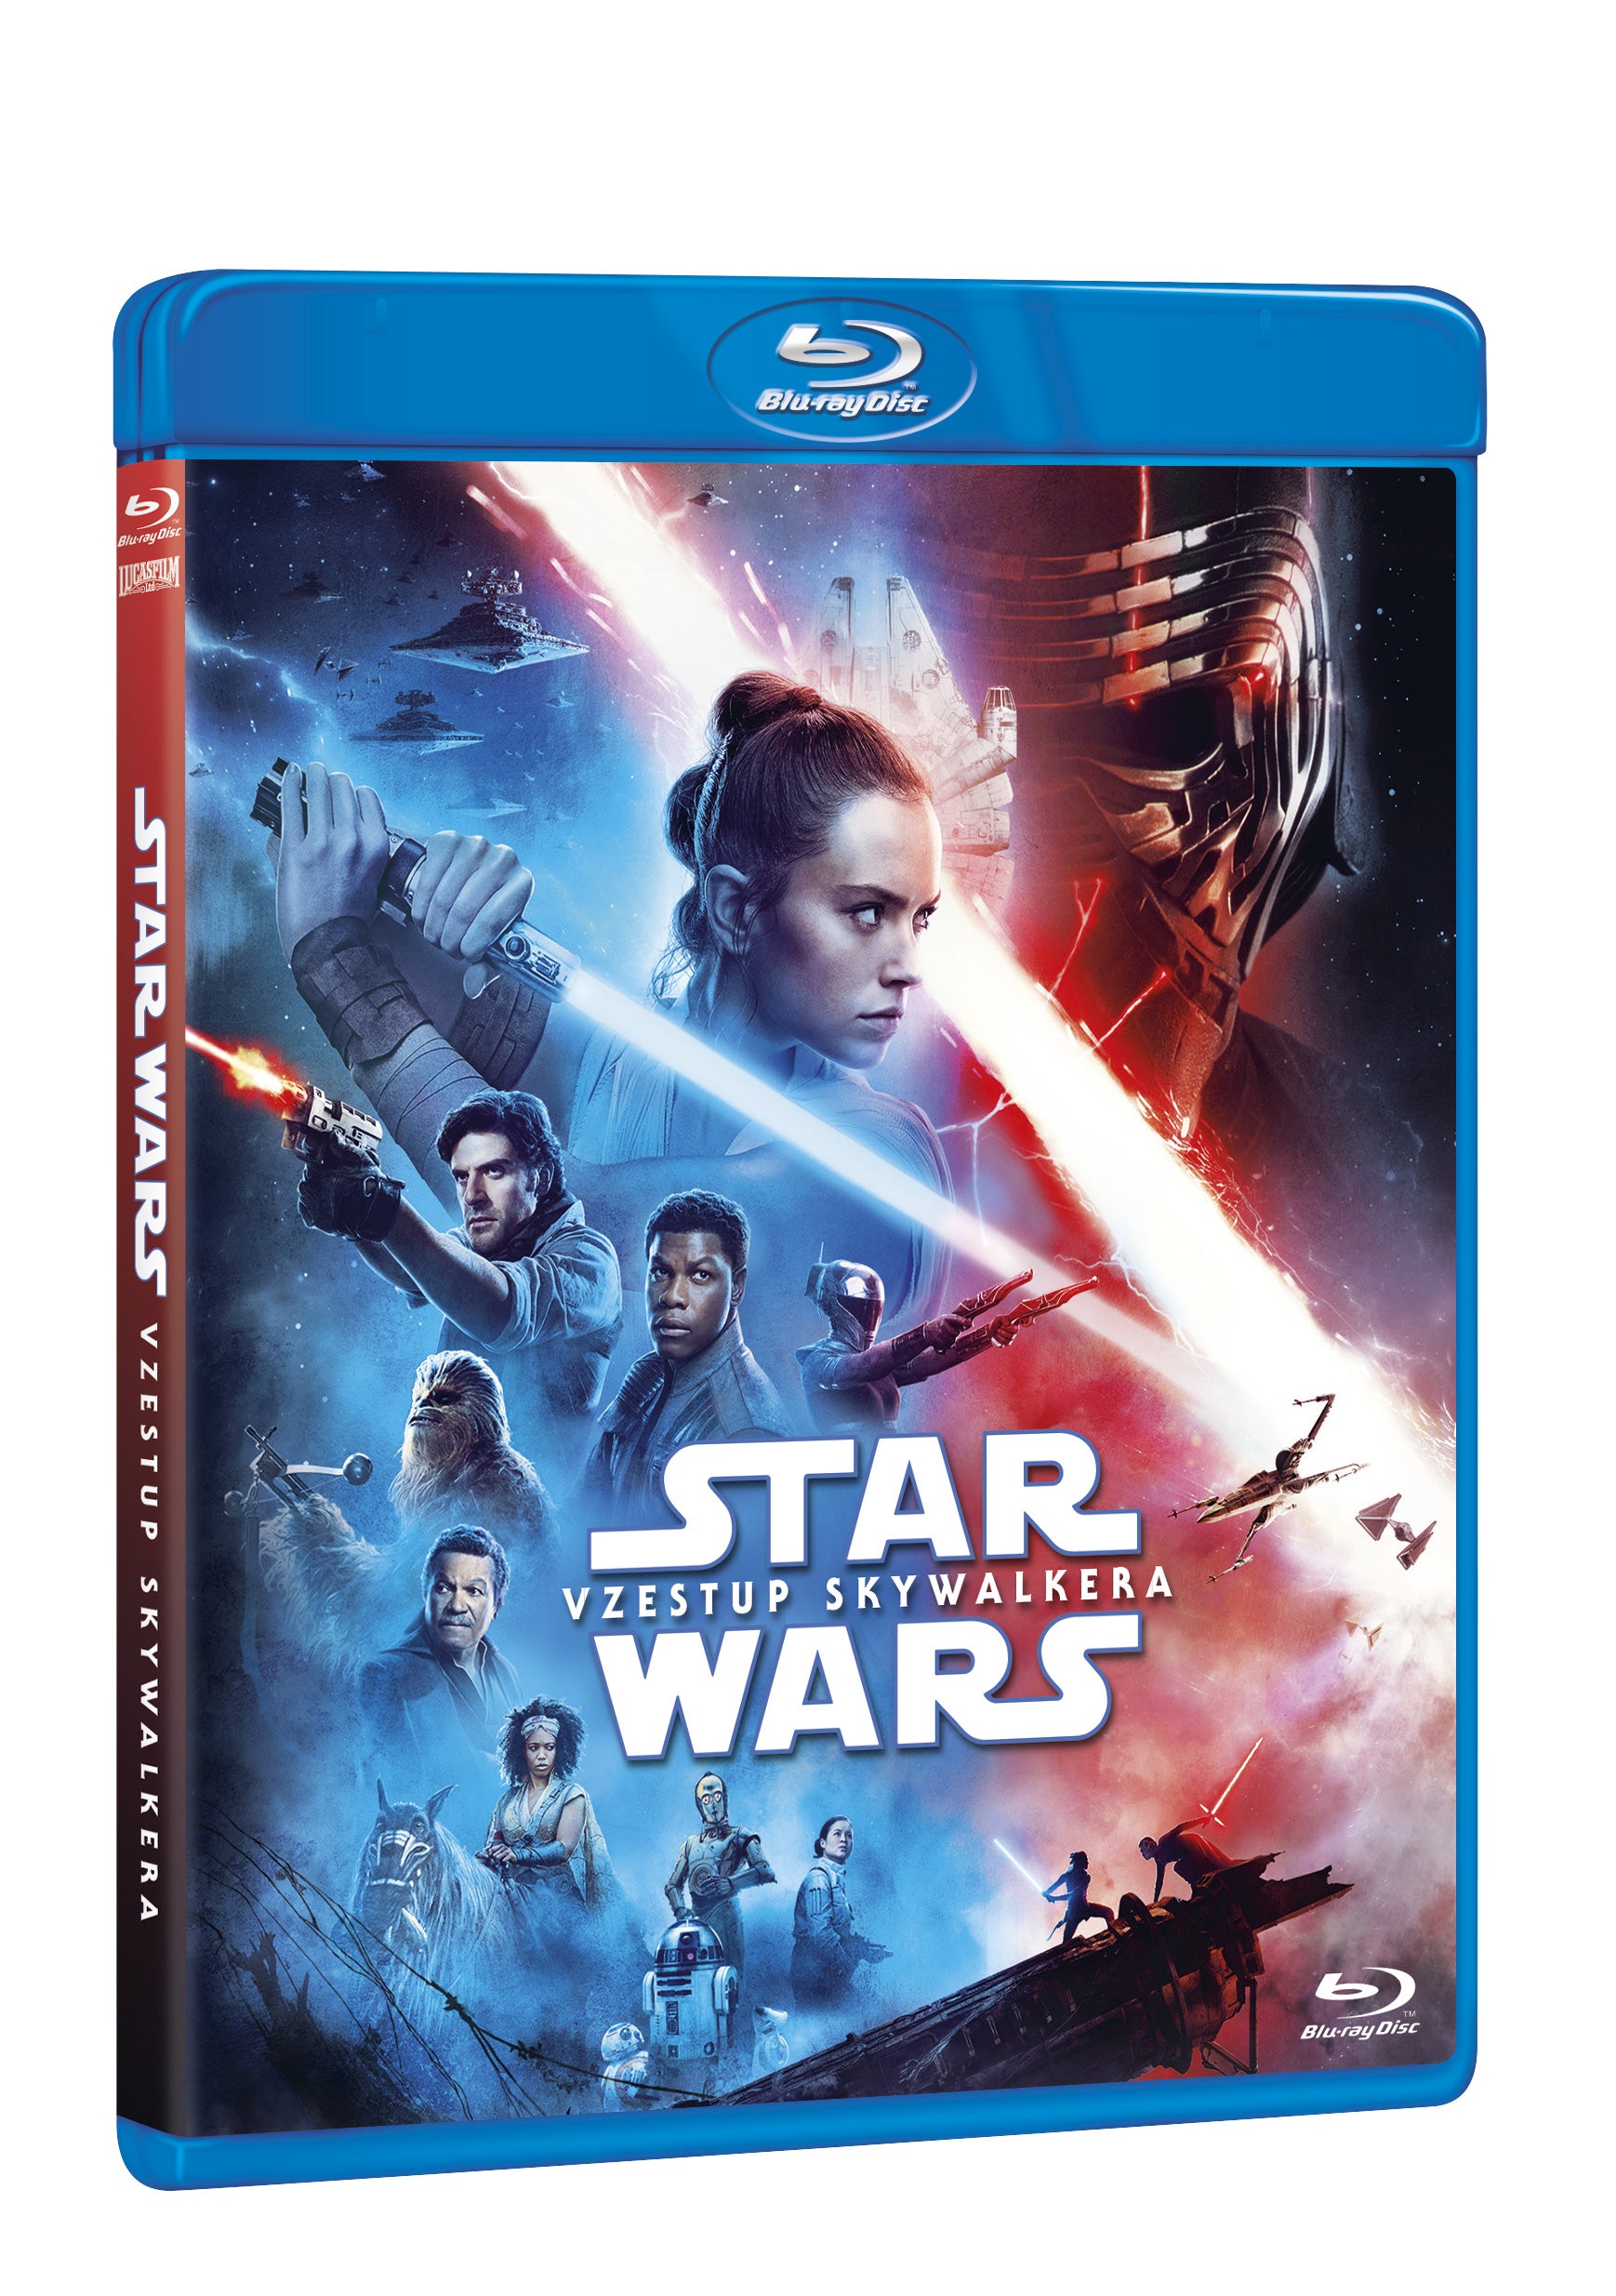 Star Wars: Vzestup Skywalkera 2BD (BD+bonus disk) / Star Wars: The Rise of Skywalker - Czech version